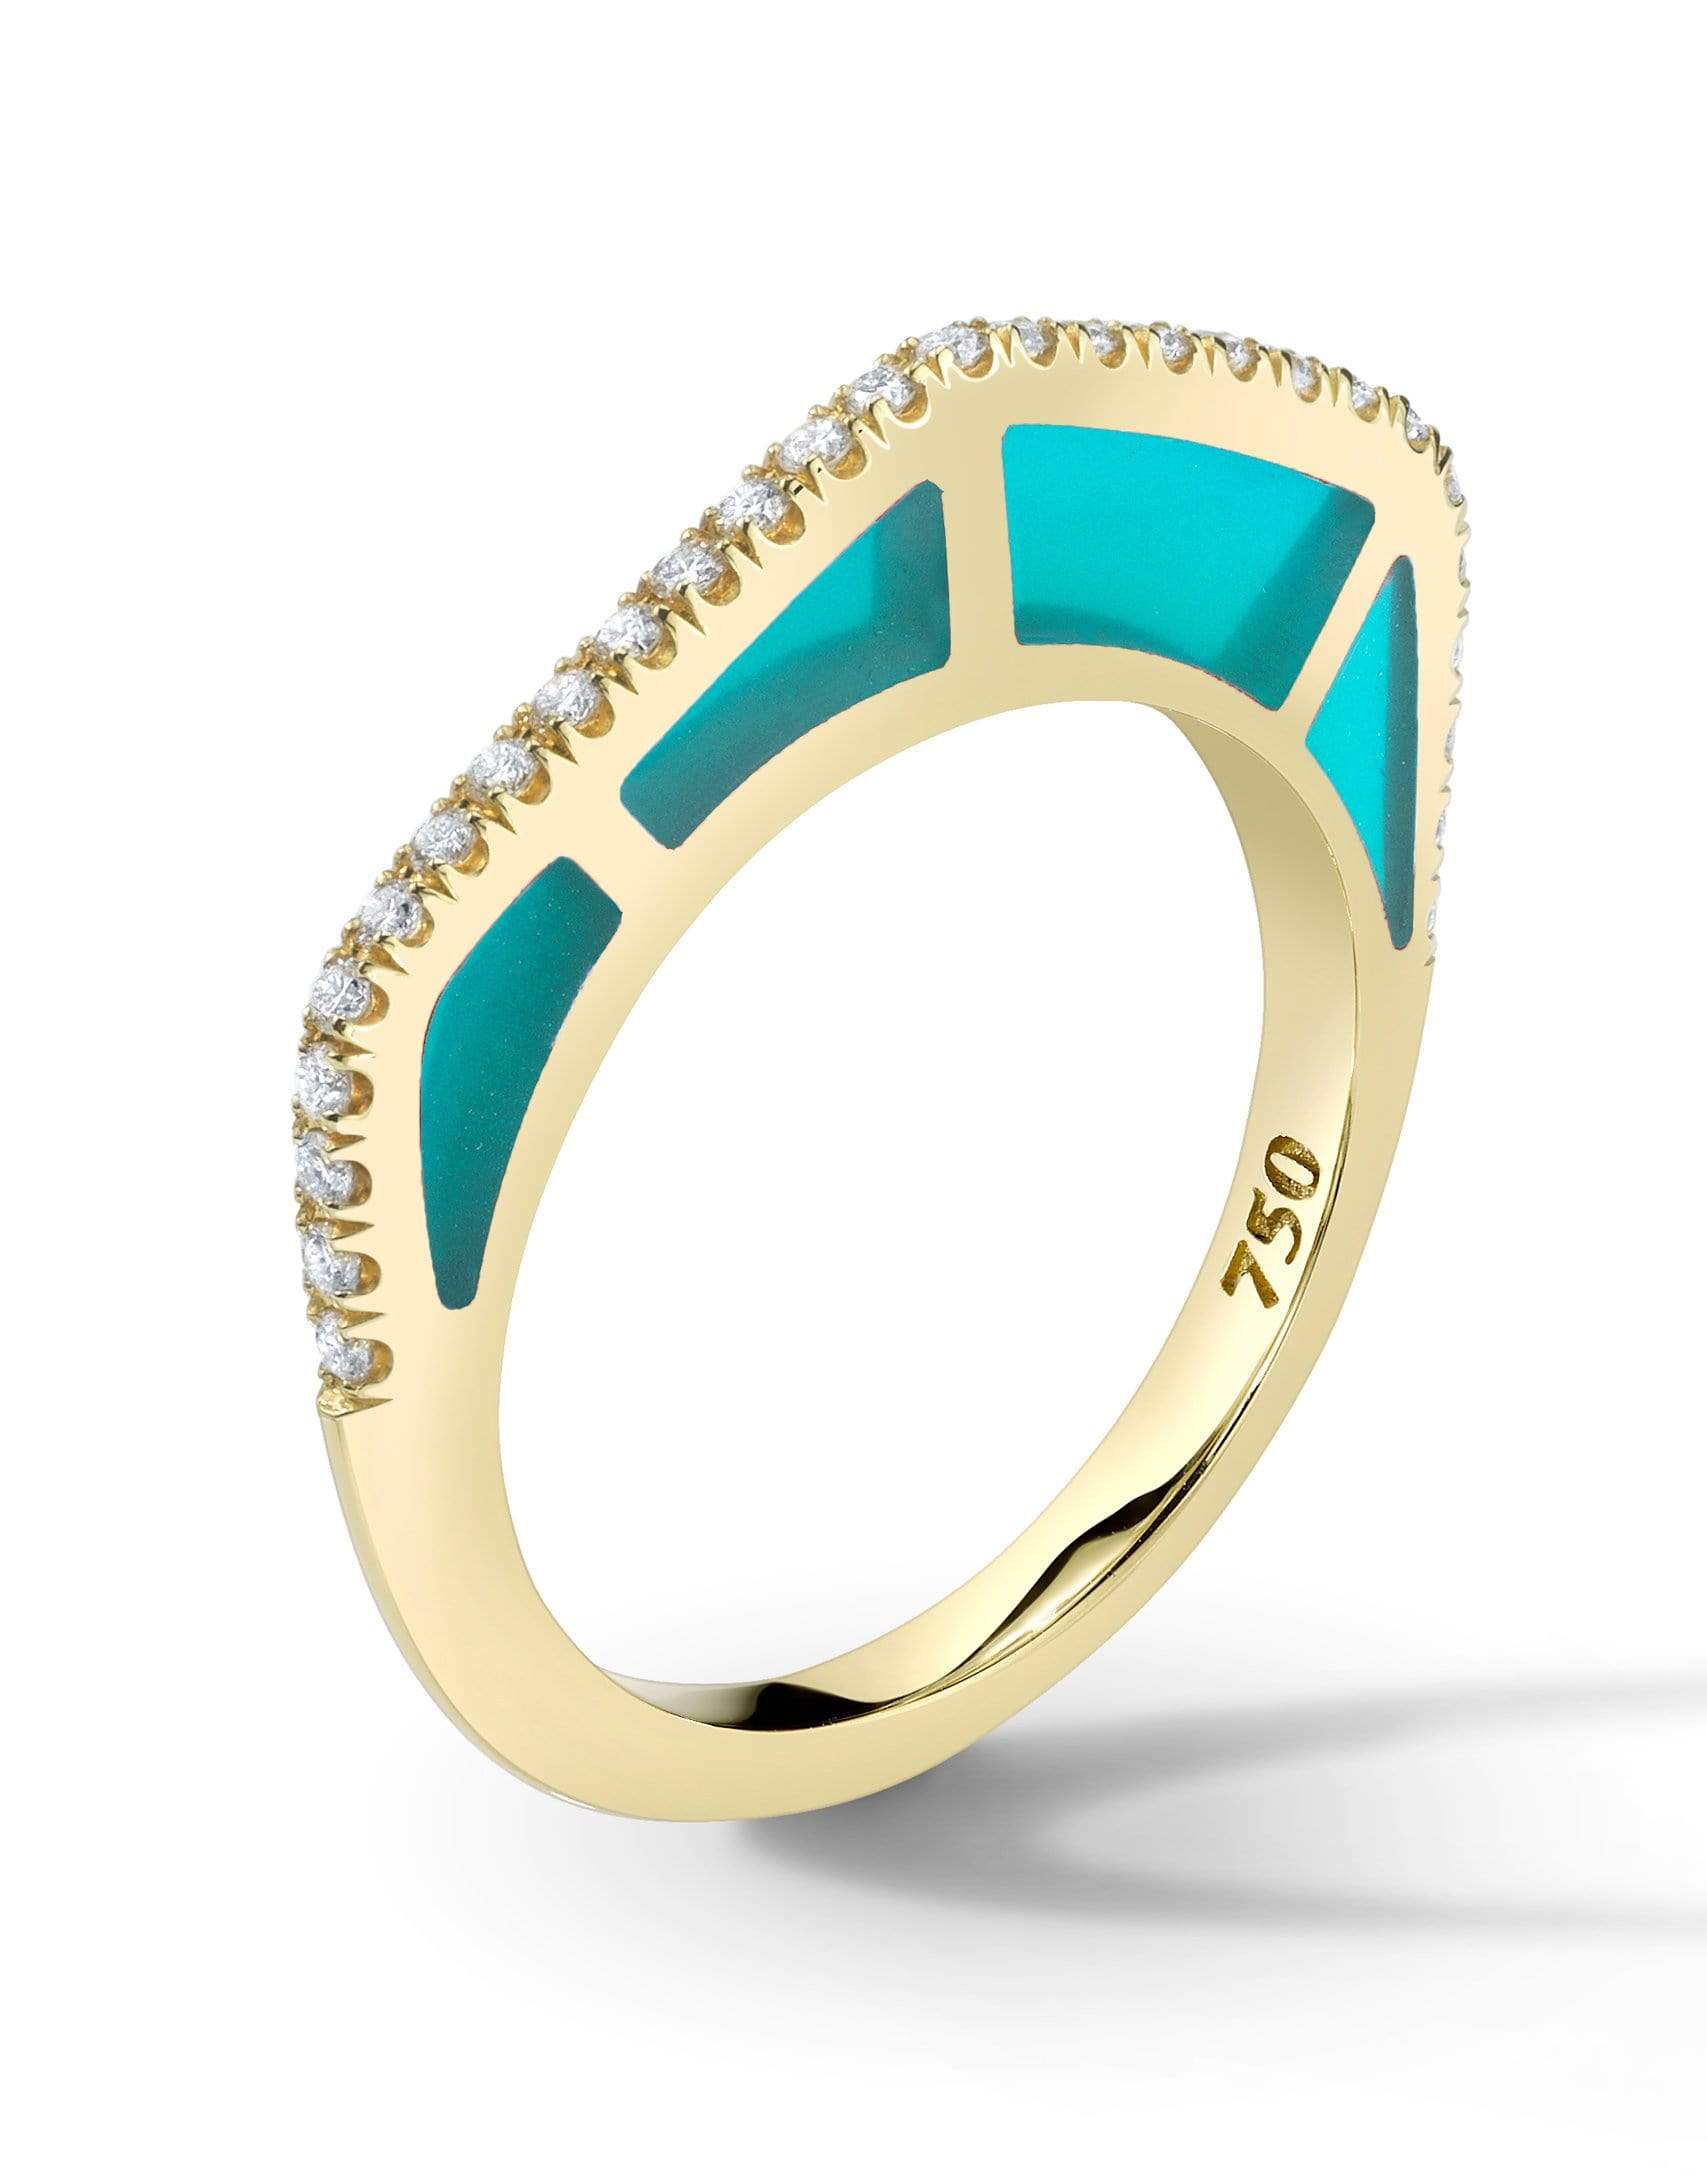 ANDY LIF-Cobra Ring Blue Enamel and Diamonds-YELLOW GOLD